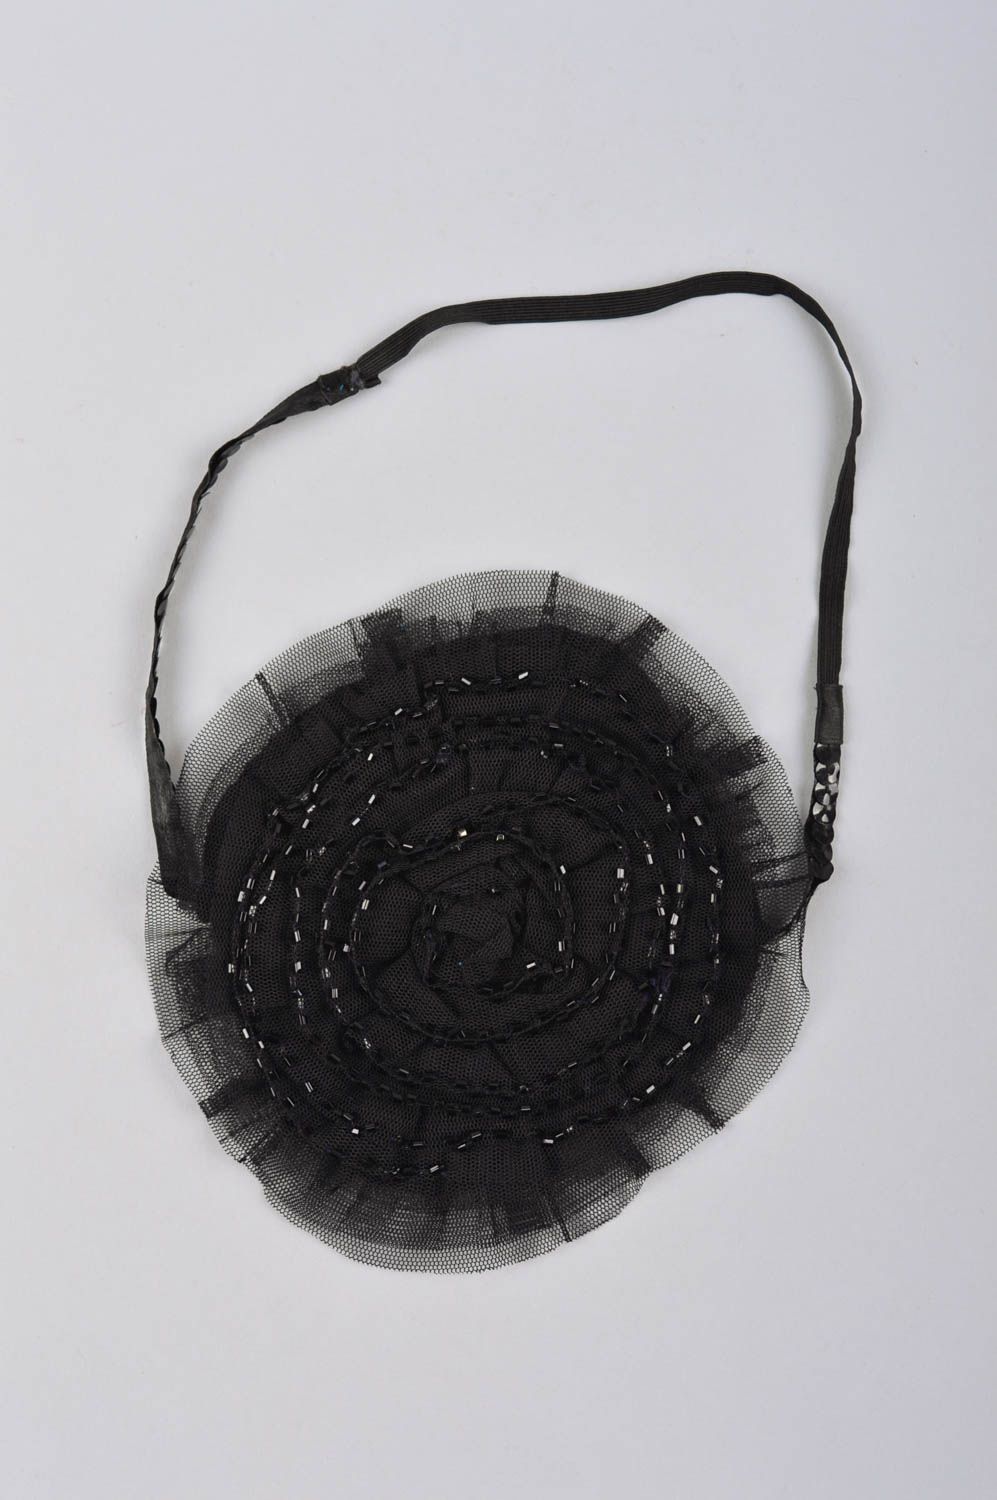 Handmade headband designer headband unusual hair accessory gift ideas photo 2